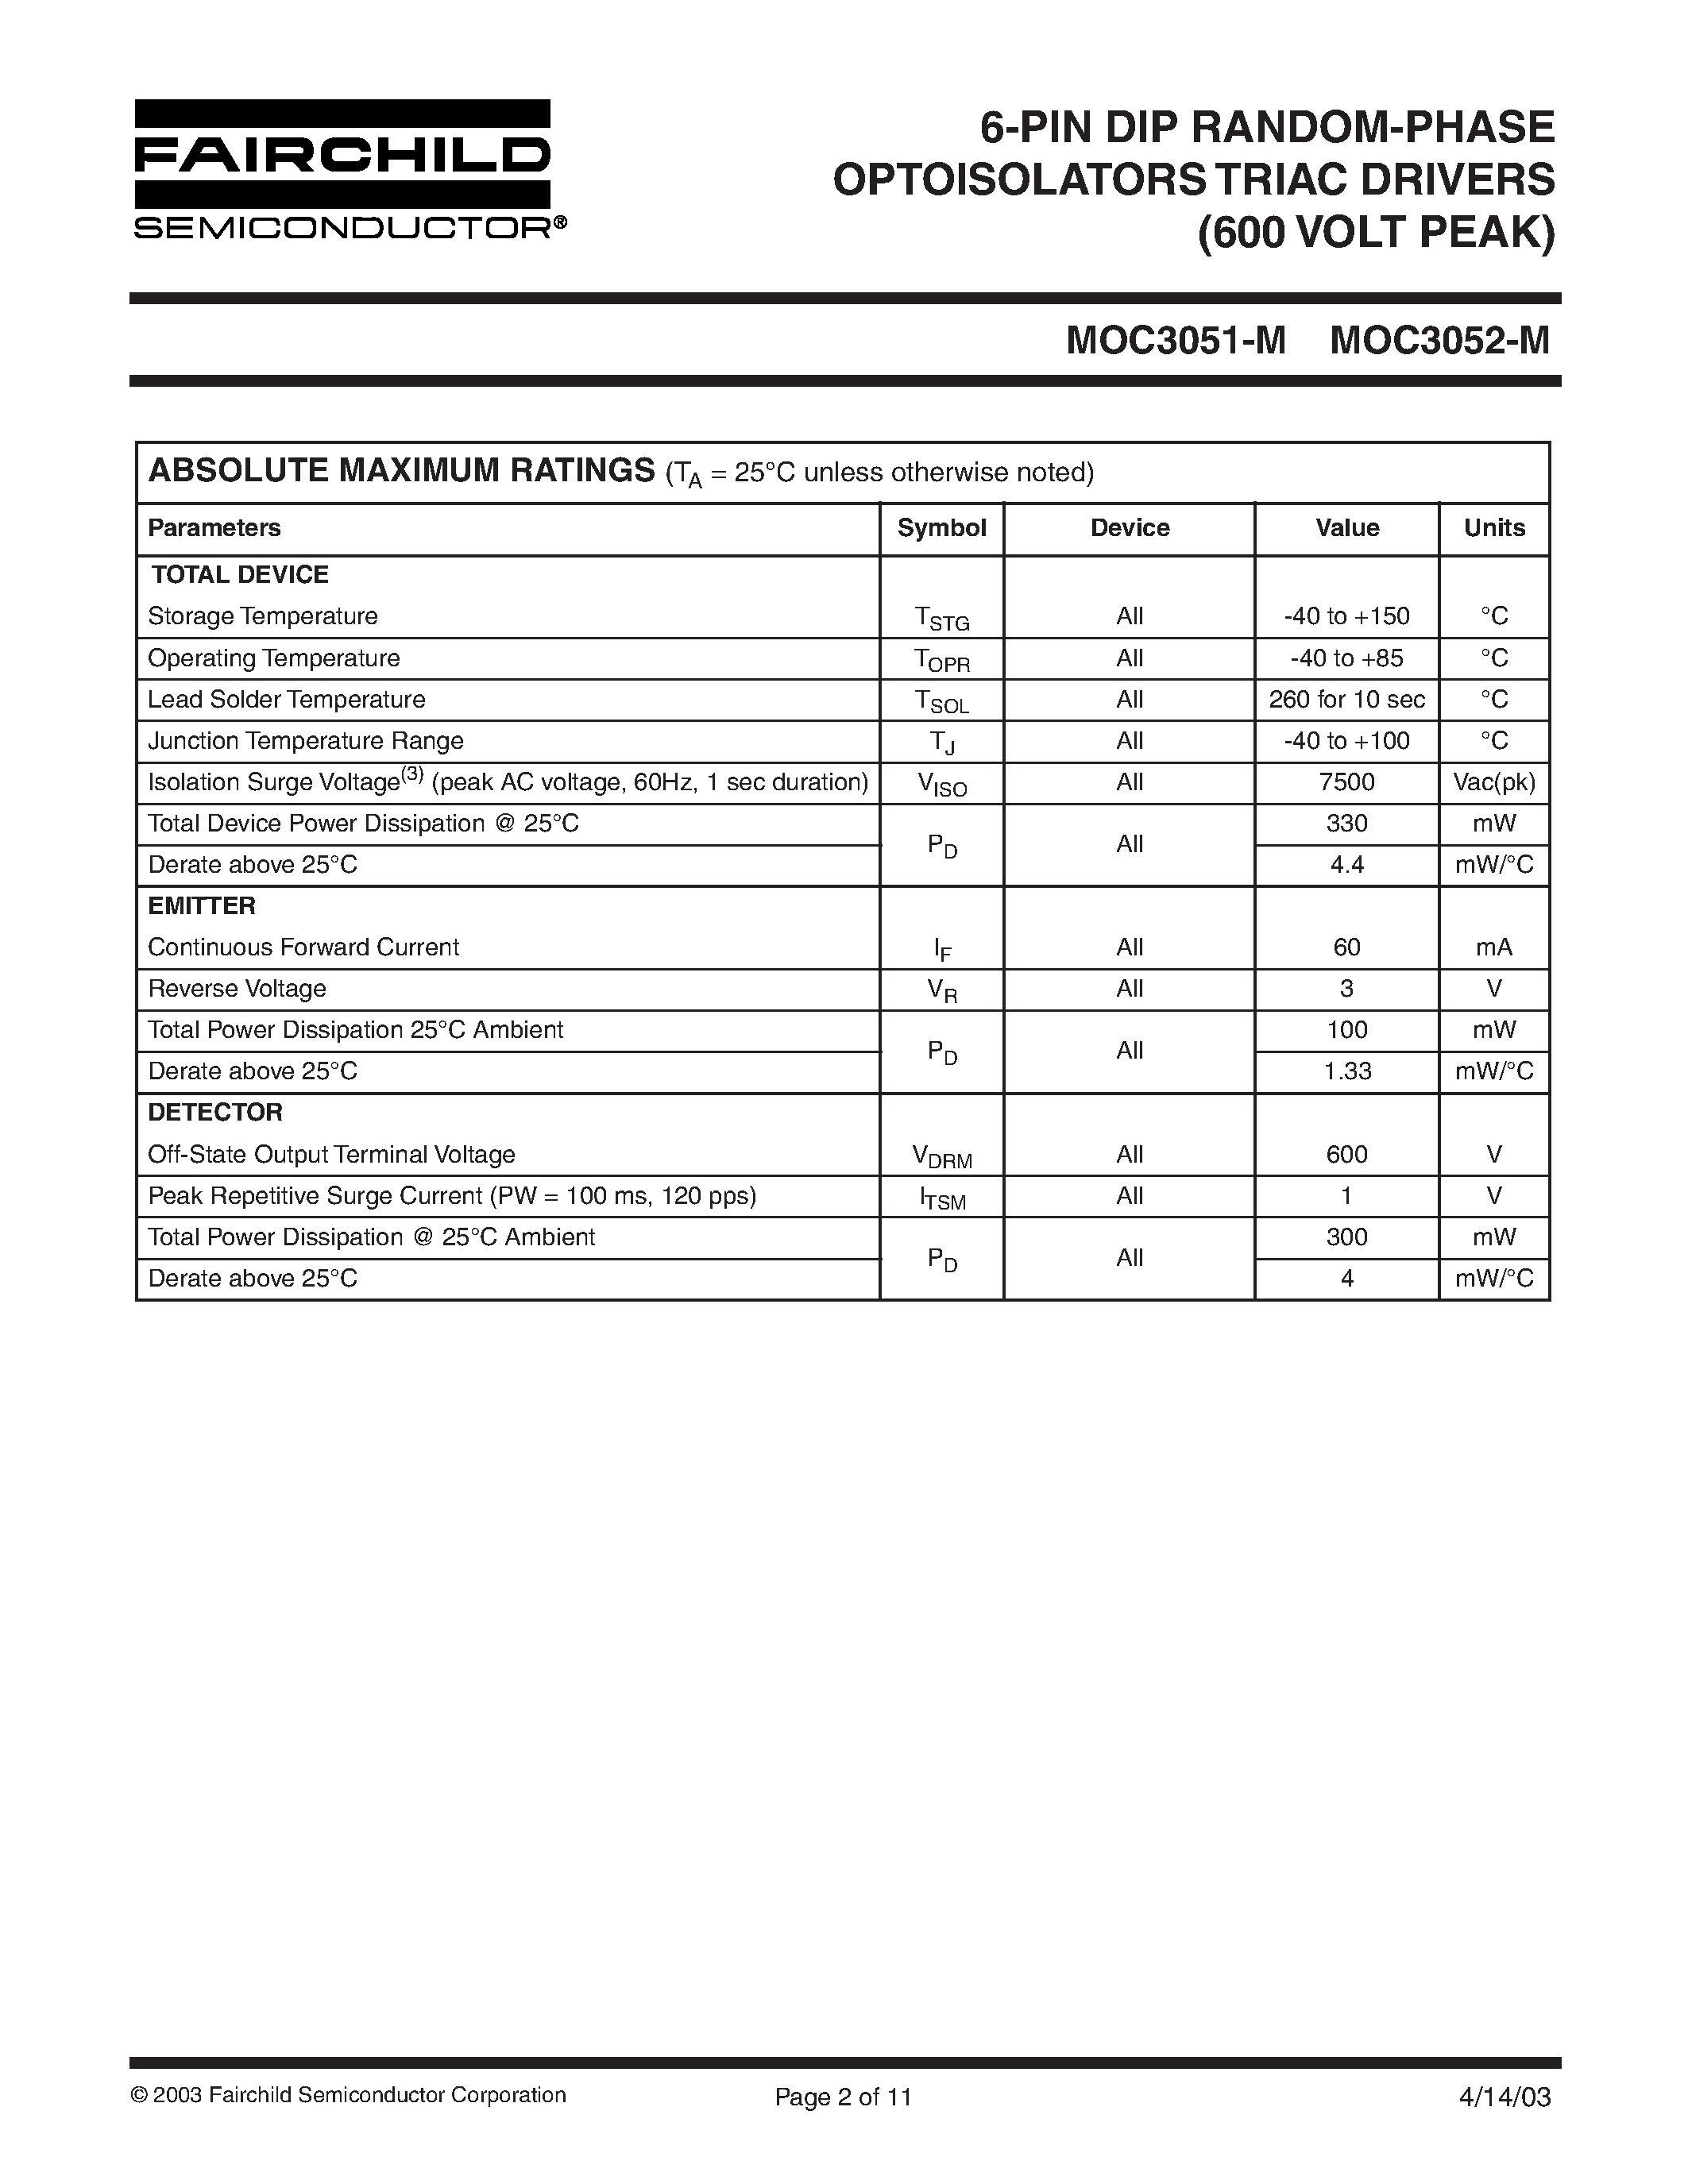 Datasheet MOC3051-M - (MOC3051-M / MOC3052-M) 6-PIN DIP RANDOM-PHASE OPTOISOLATORS TRIAC DRIVERS (600 VOLT PEAK) page 2